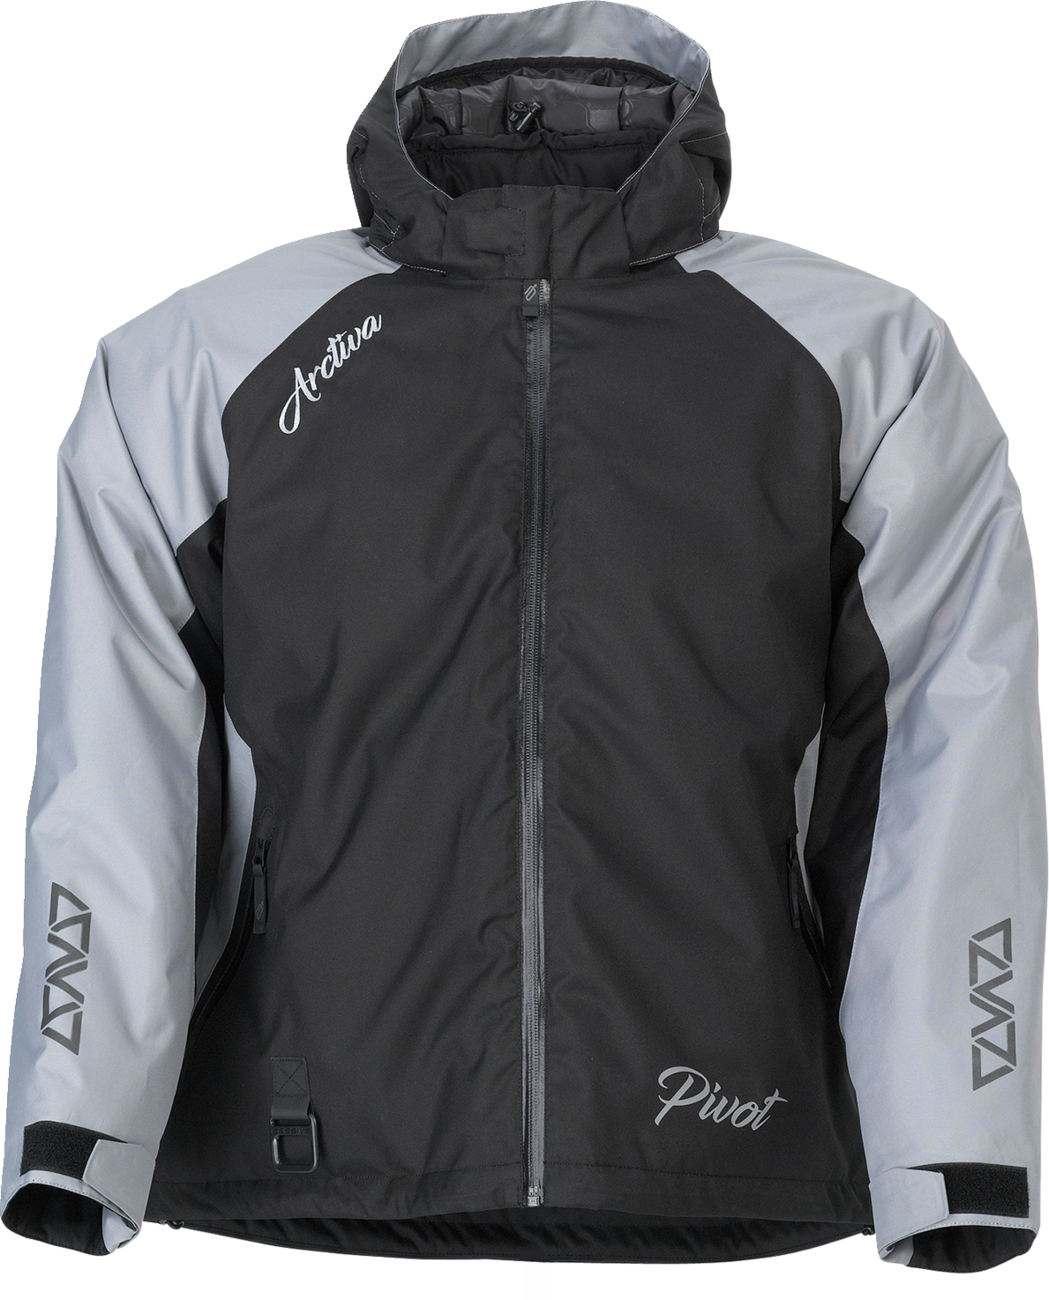 ARCTIVA Women's Pivot 5 Hooded Jacket - Gray - XS 3121-0802